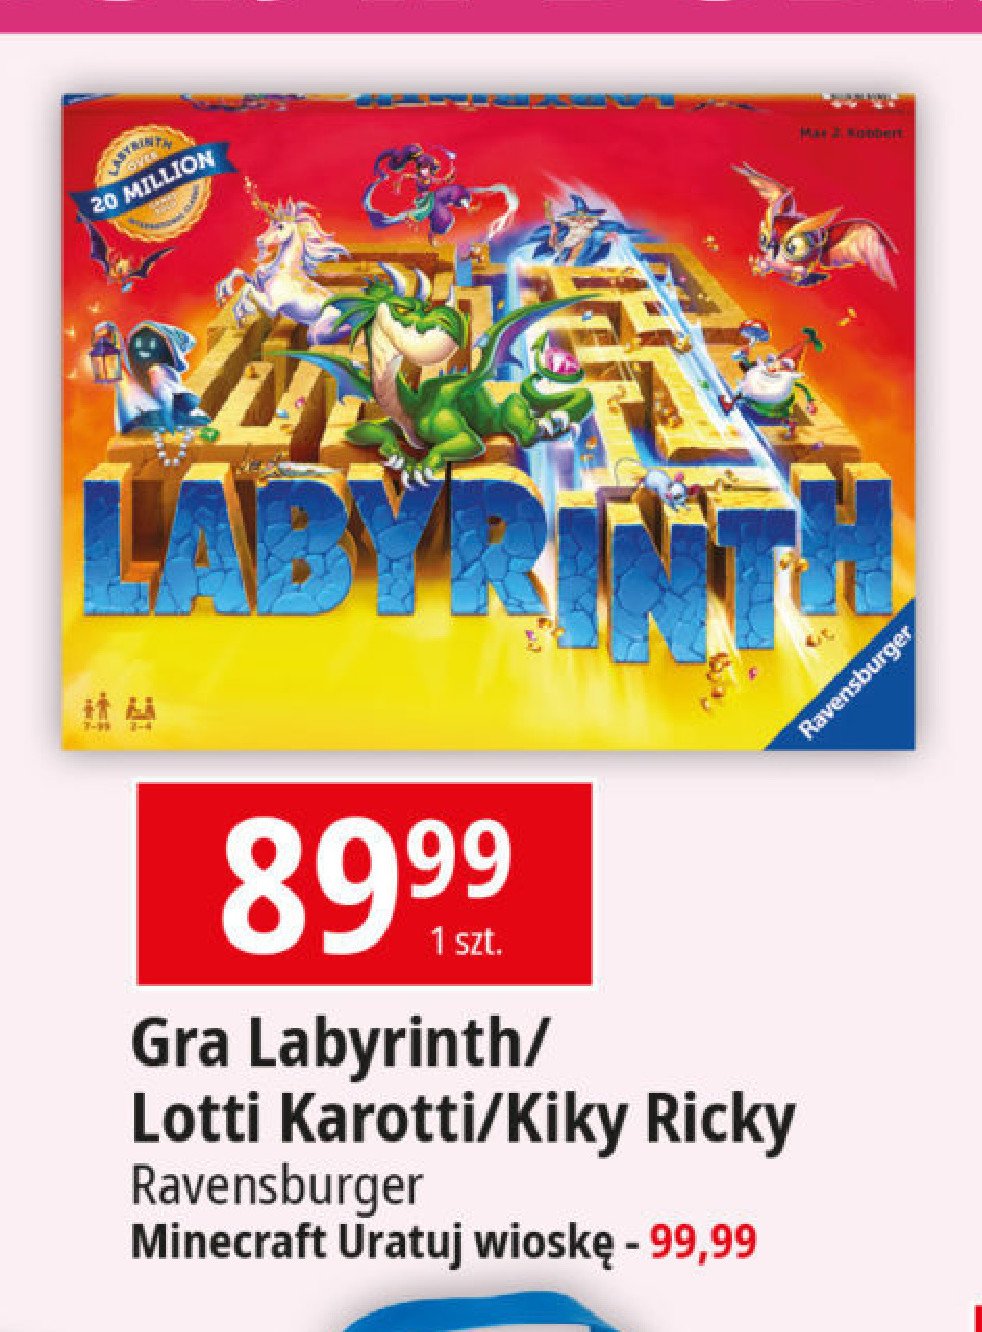 Gra labyrinth Ravensburger promocja